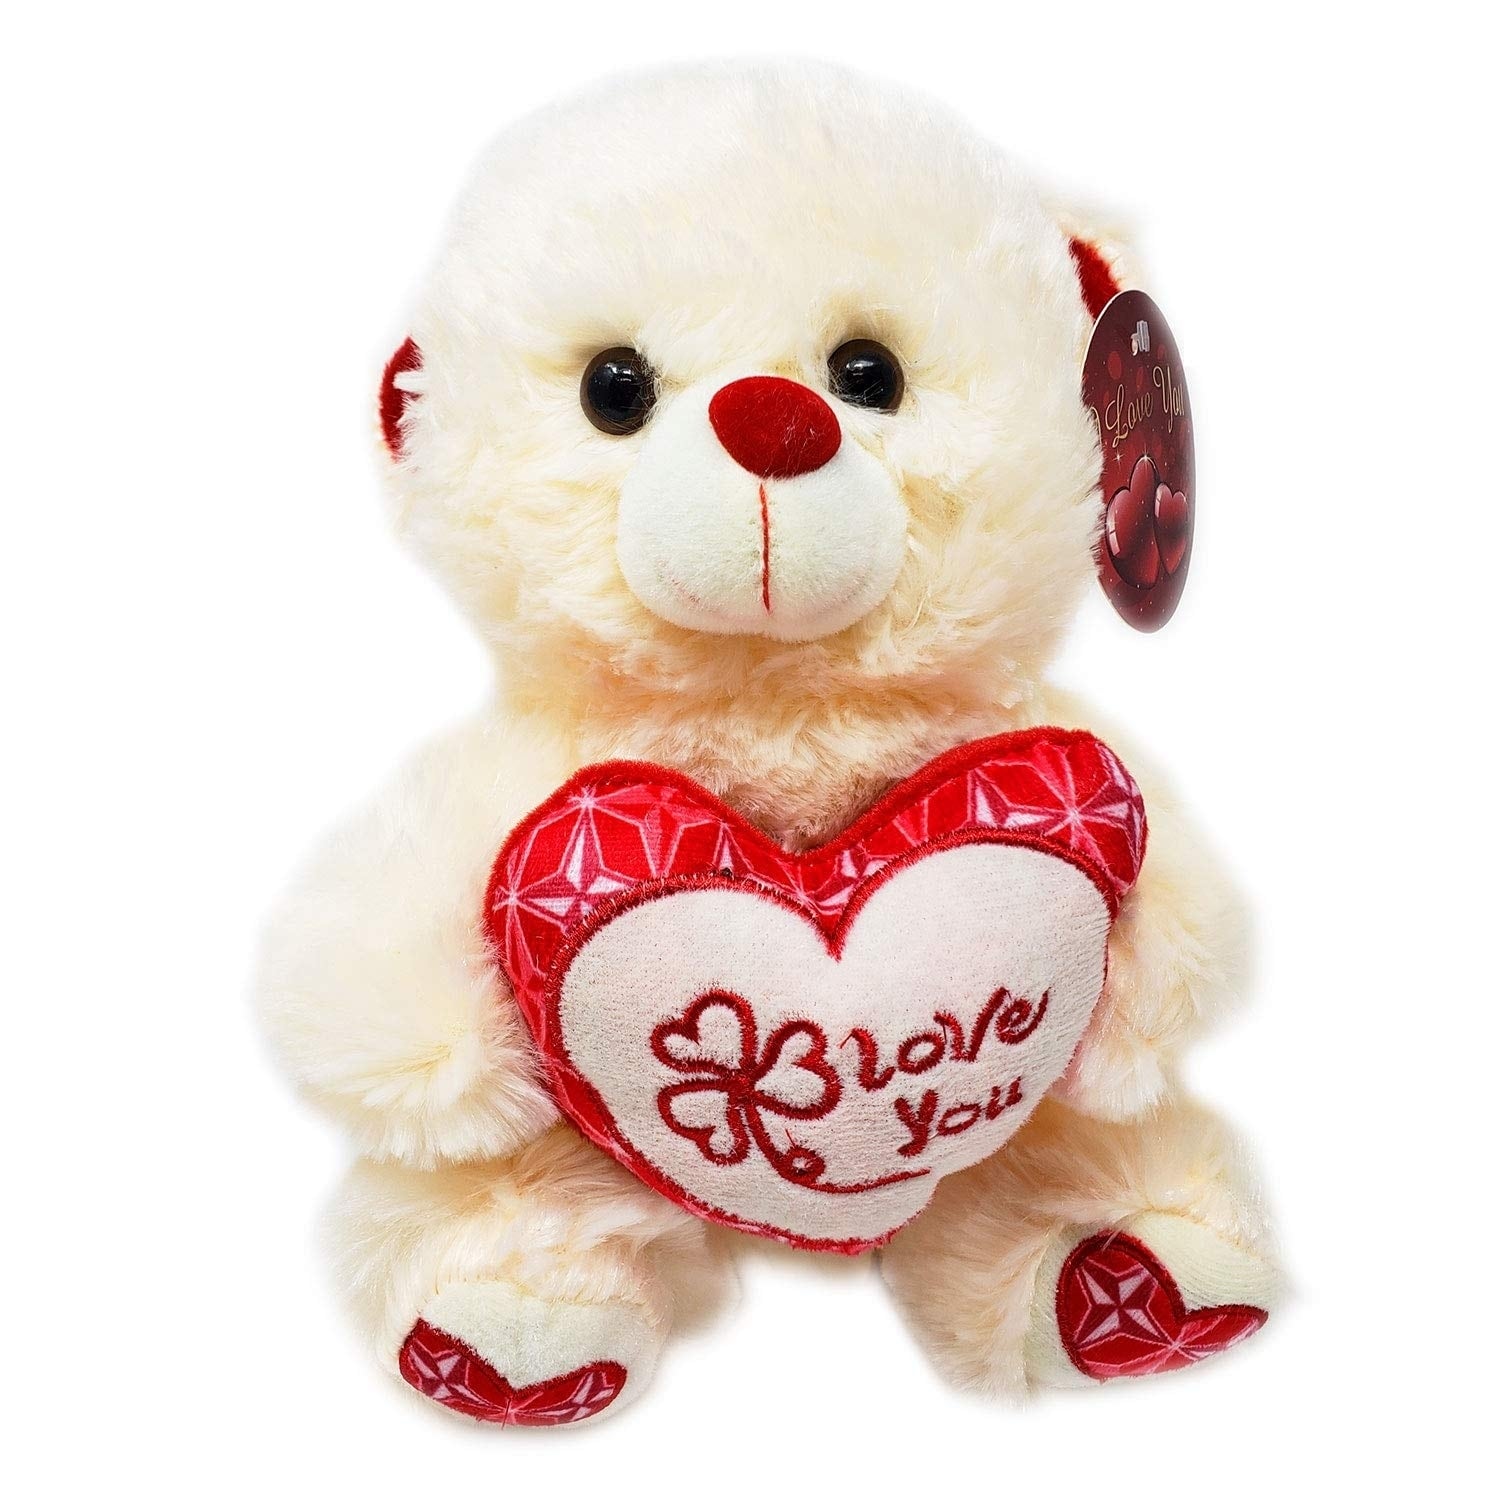 stuffed bear with heart